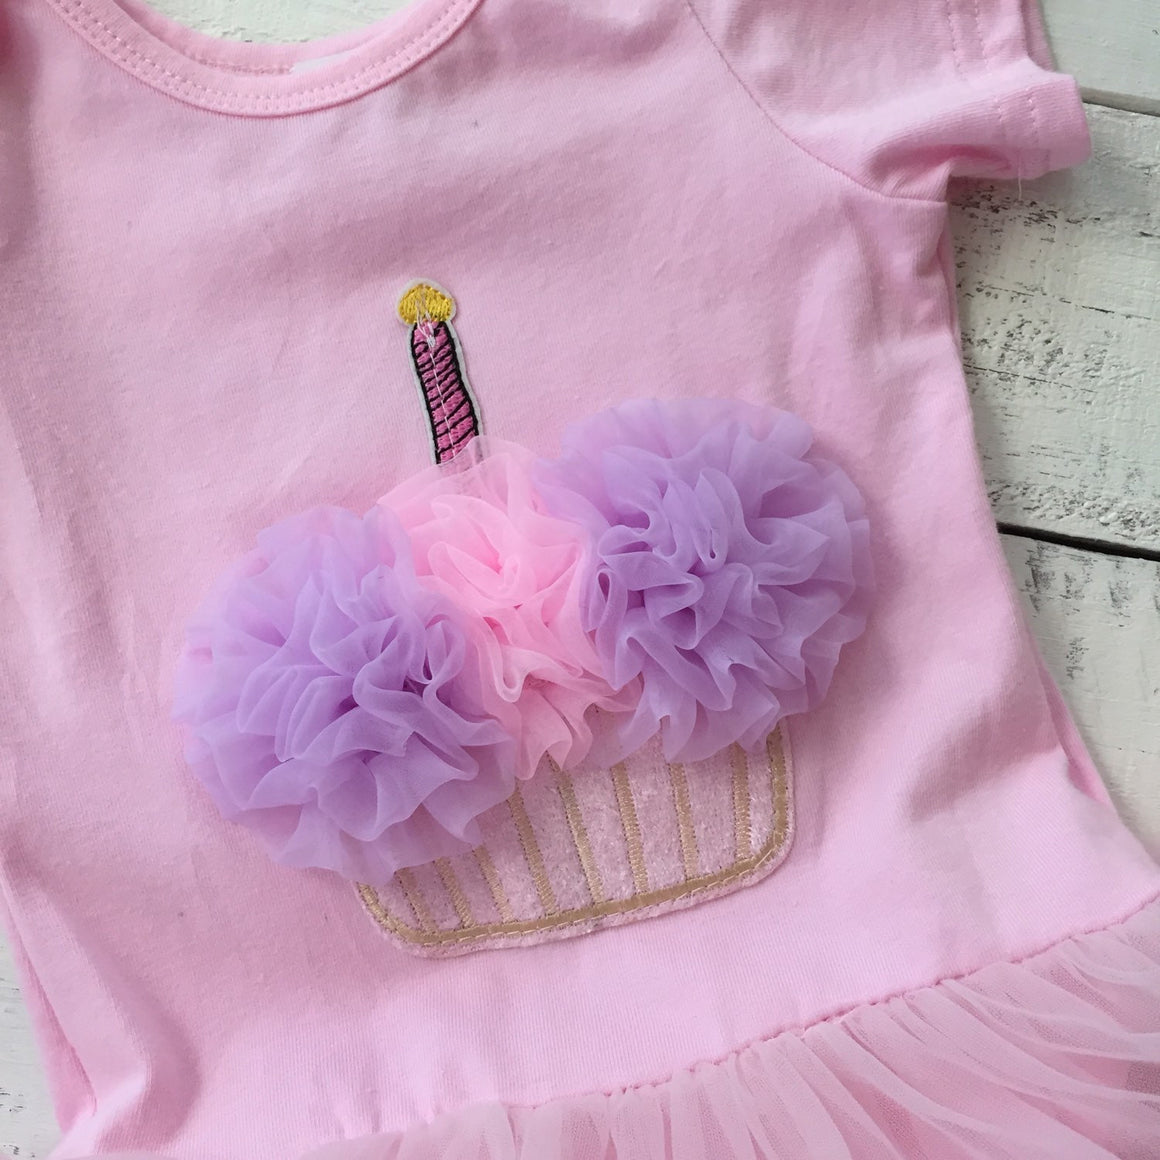 Cupcake Tutu Dress and matching rhinestone headband - Pink and Purple - HoneyLoveBoutique